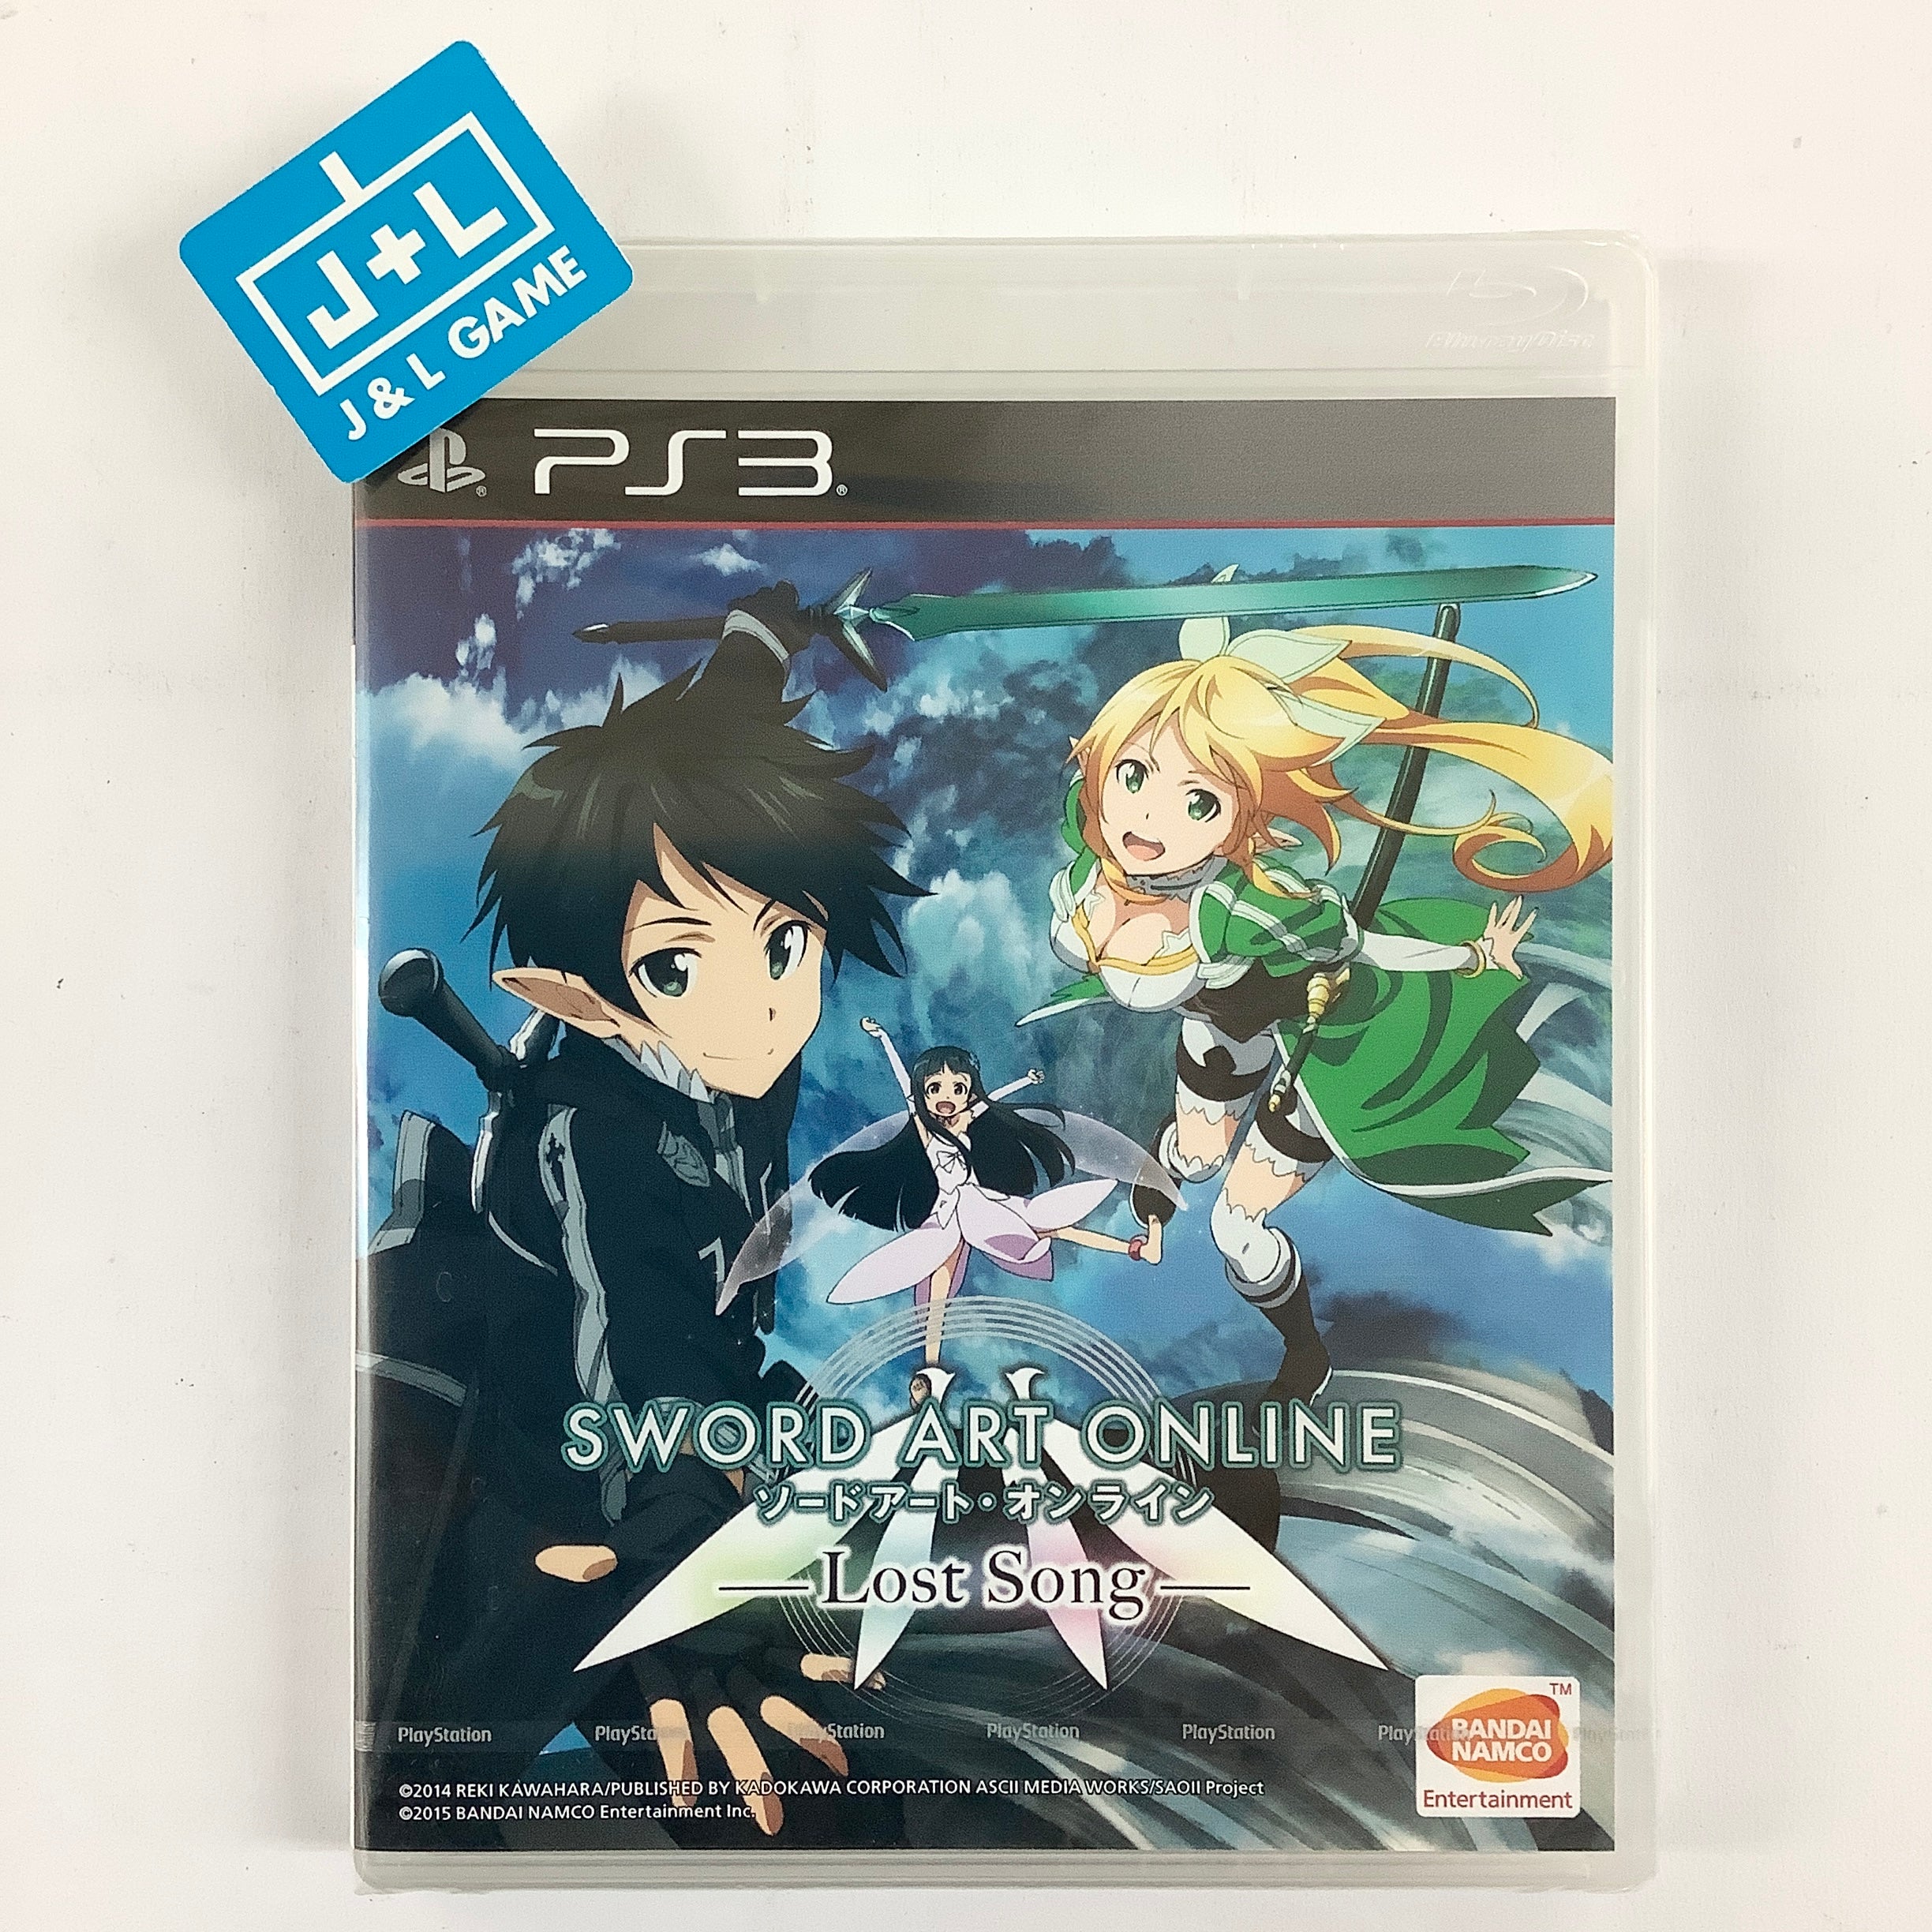 Sword Art Online: Lost Song (English Subtitles) - (PS3) PlayStation 3 (Asia Import) Video Games Bandai Namco Games   